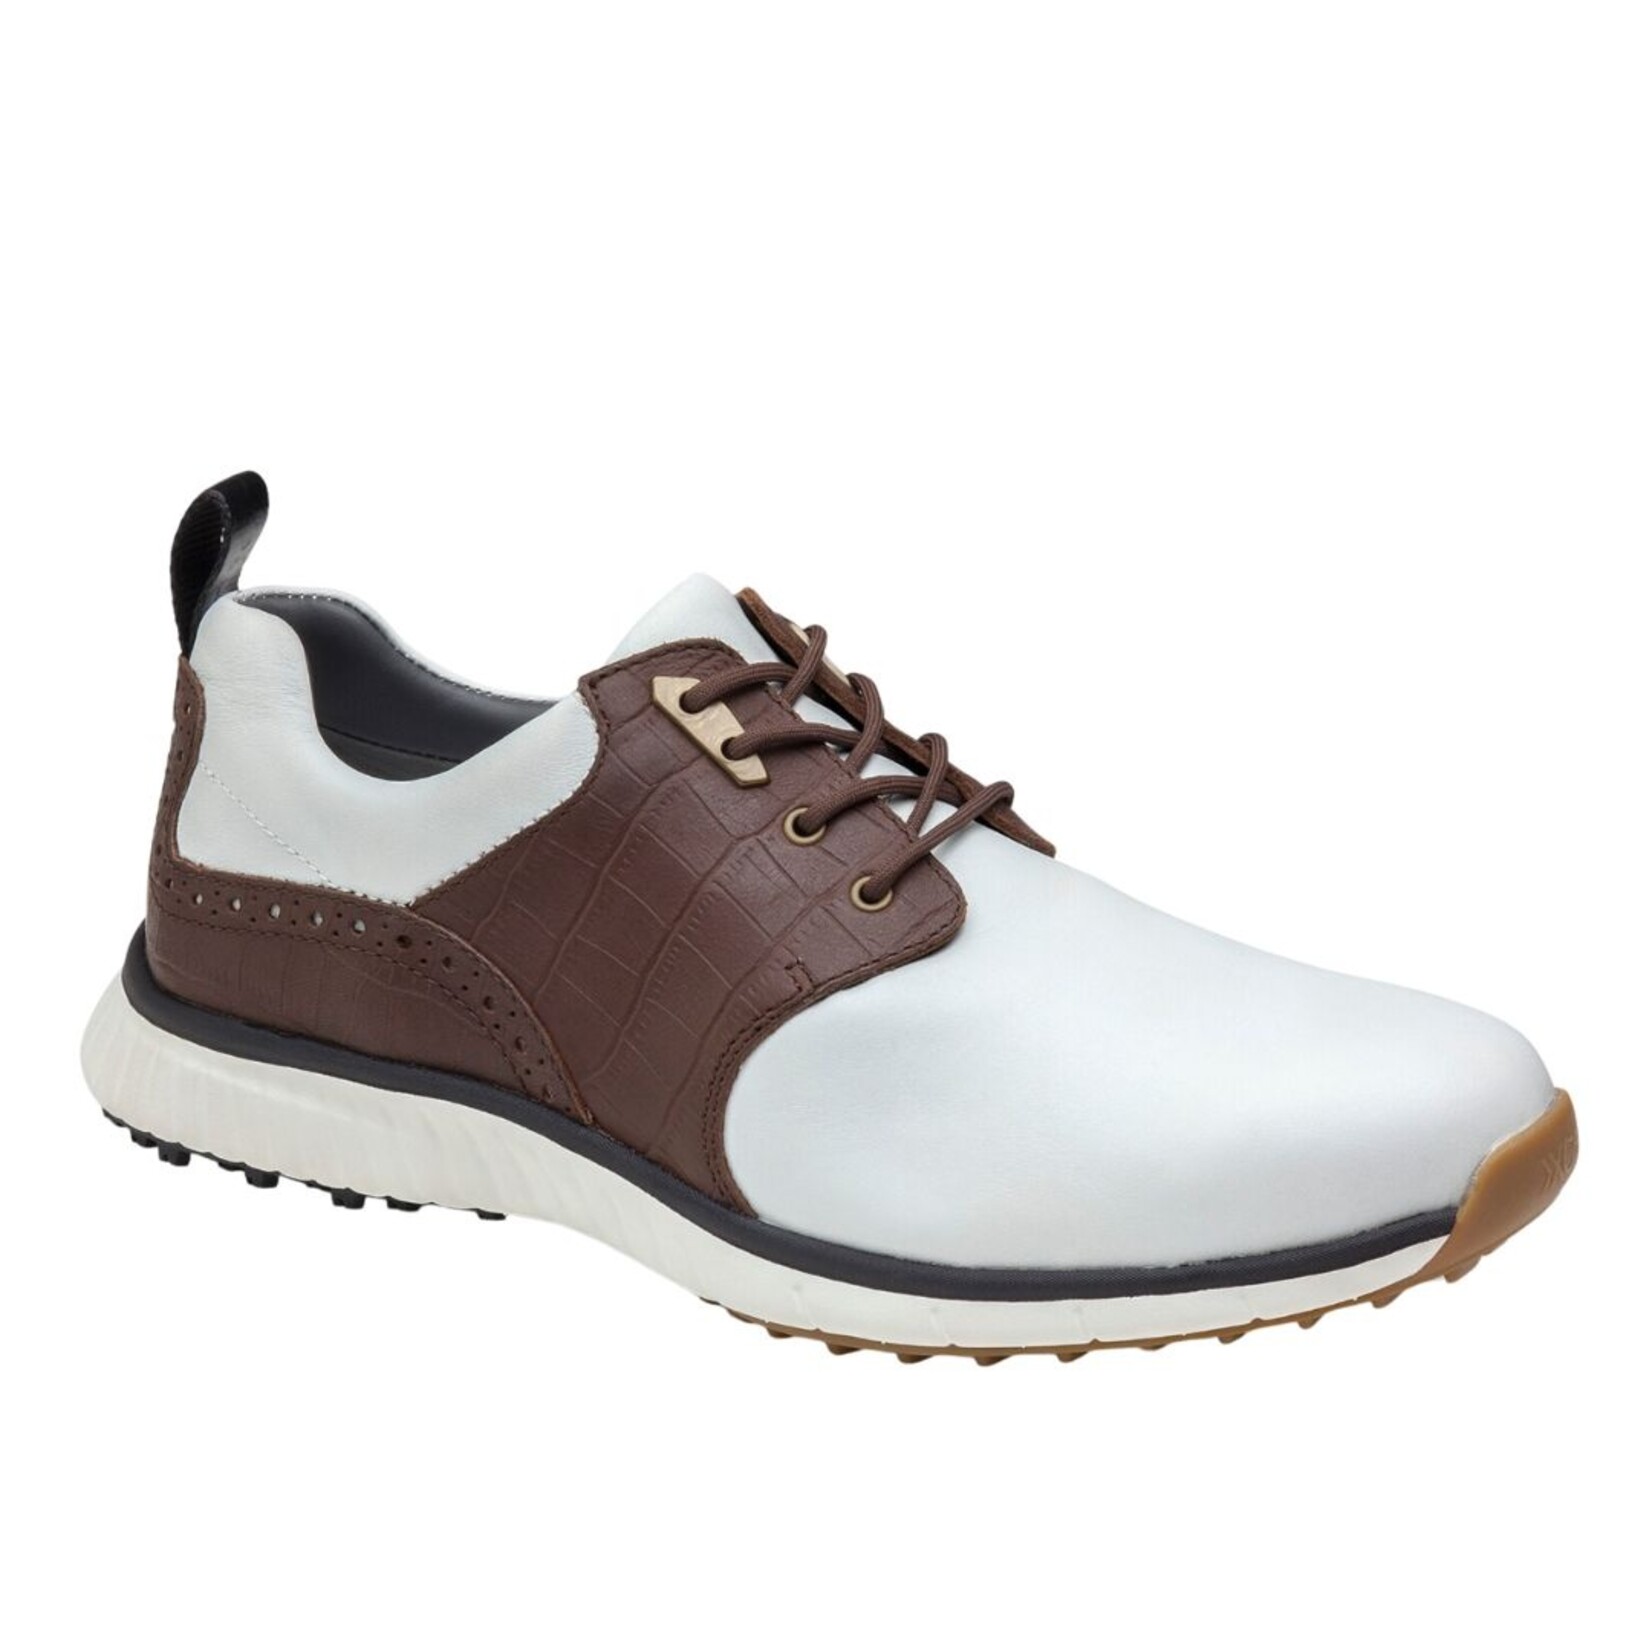 Johnston&Murphy Johnston&Murphy H2LuxeHybrid Men’s Golf Shoes